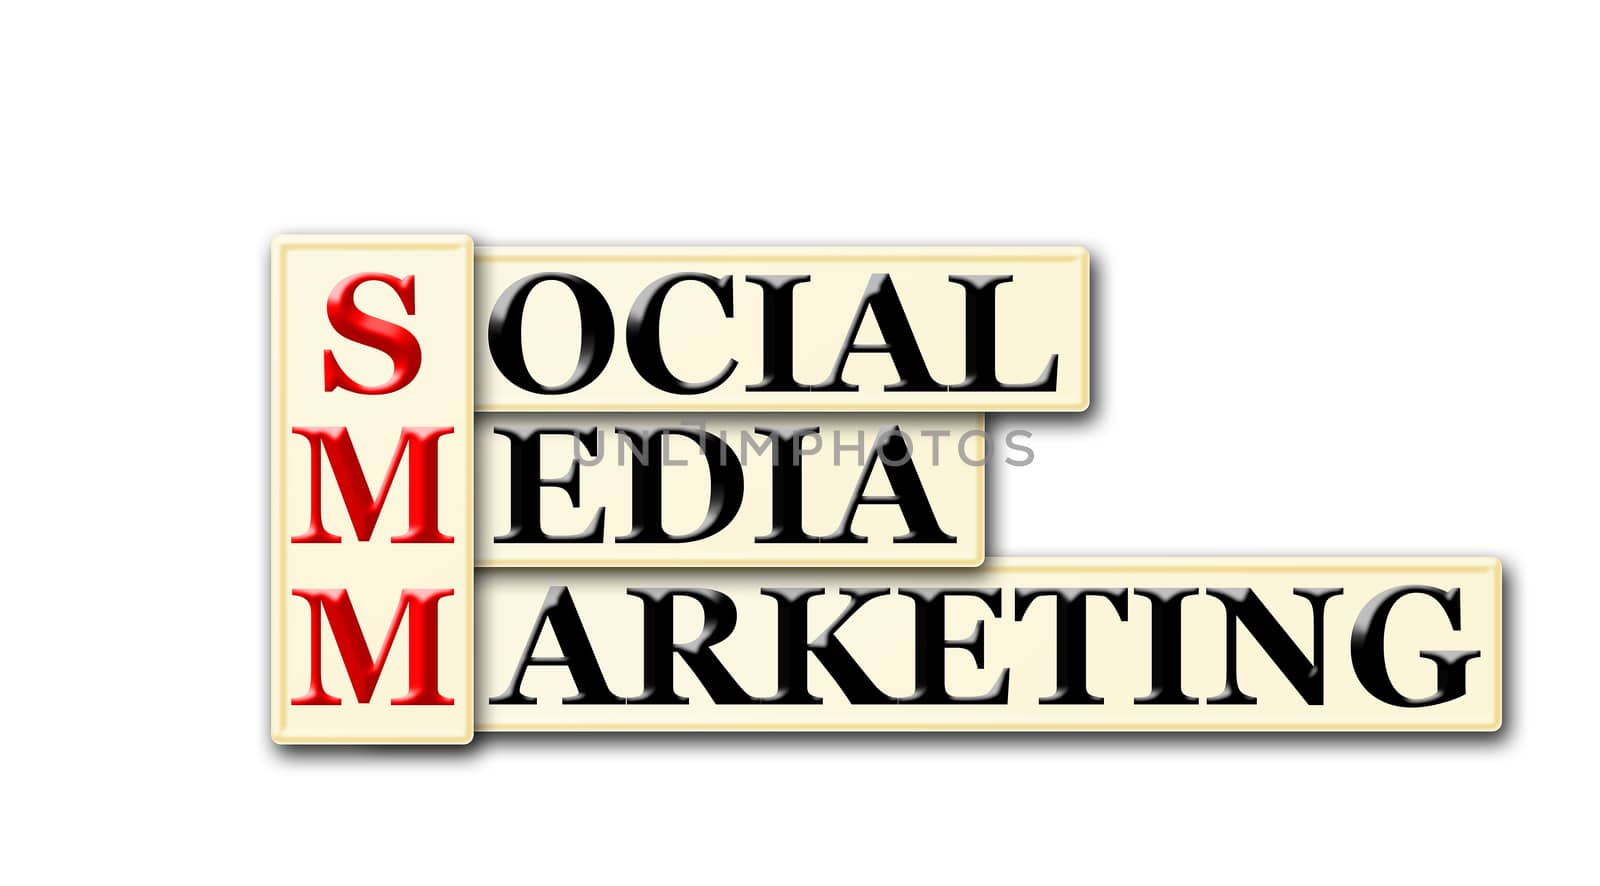 Conceptual SMM Social Media  Marketing  acronym on white